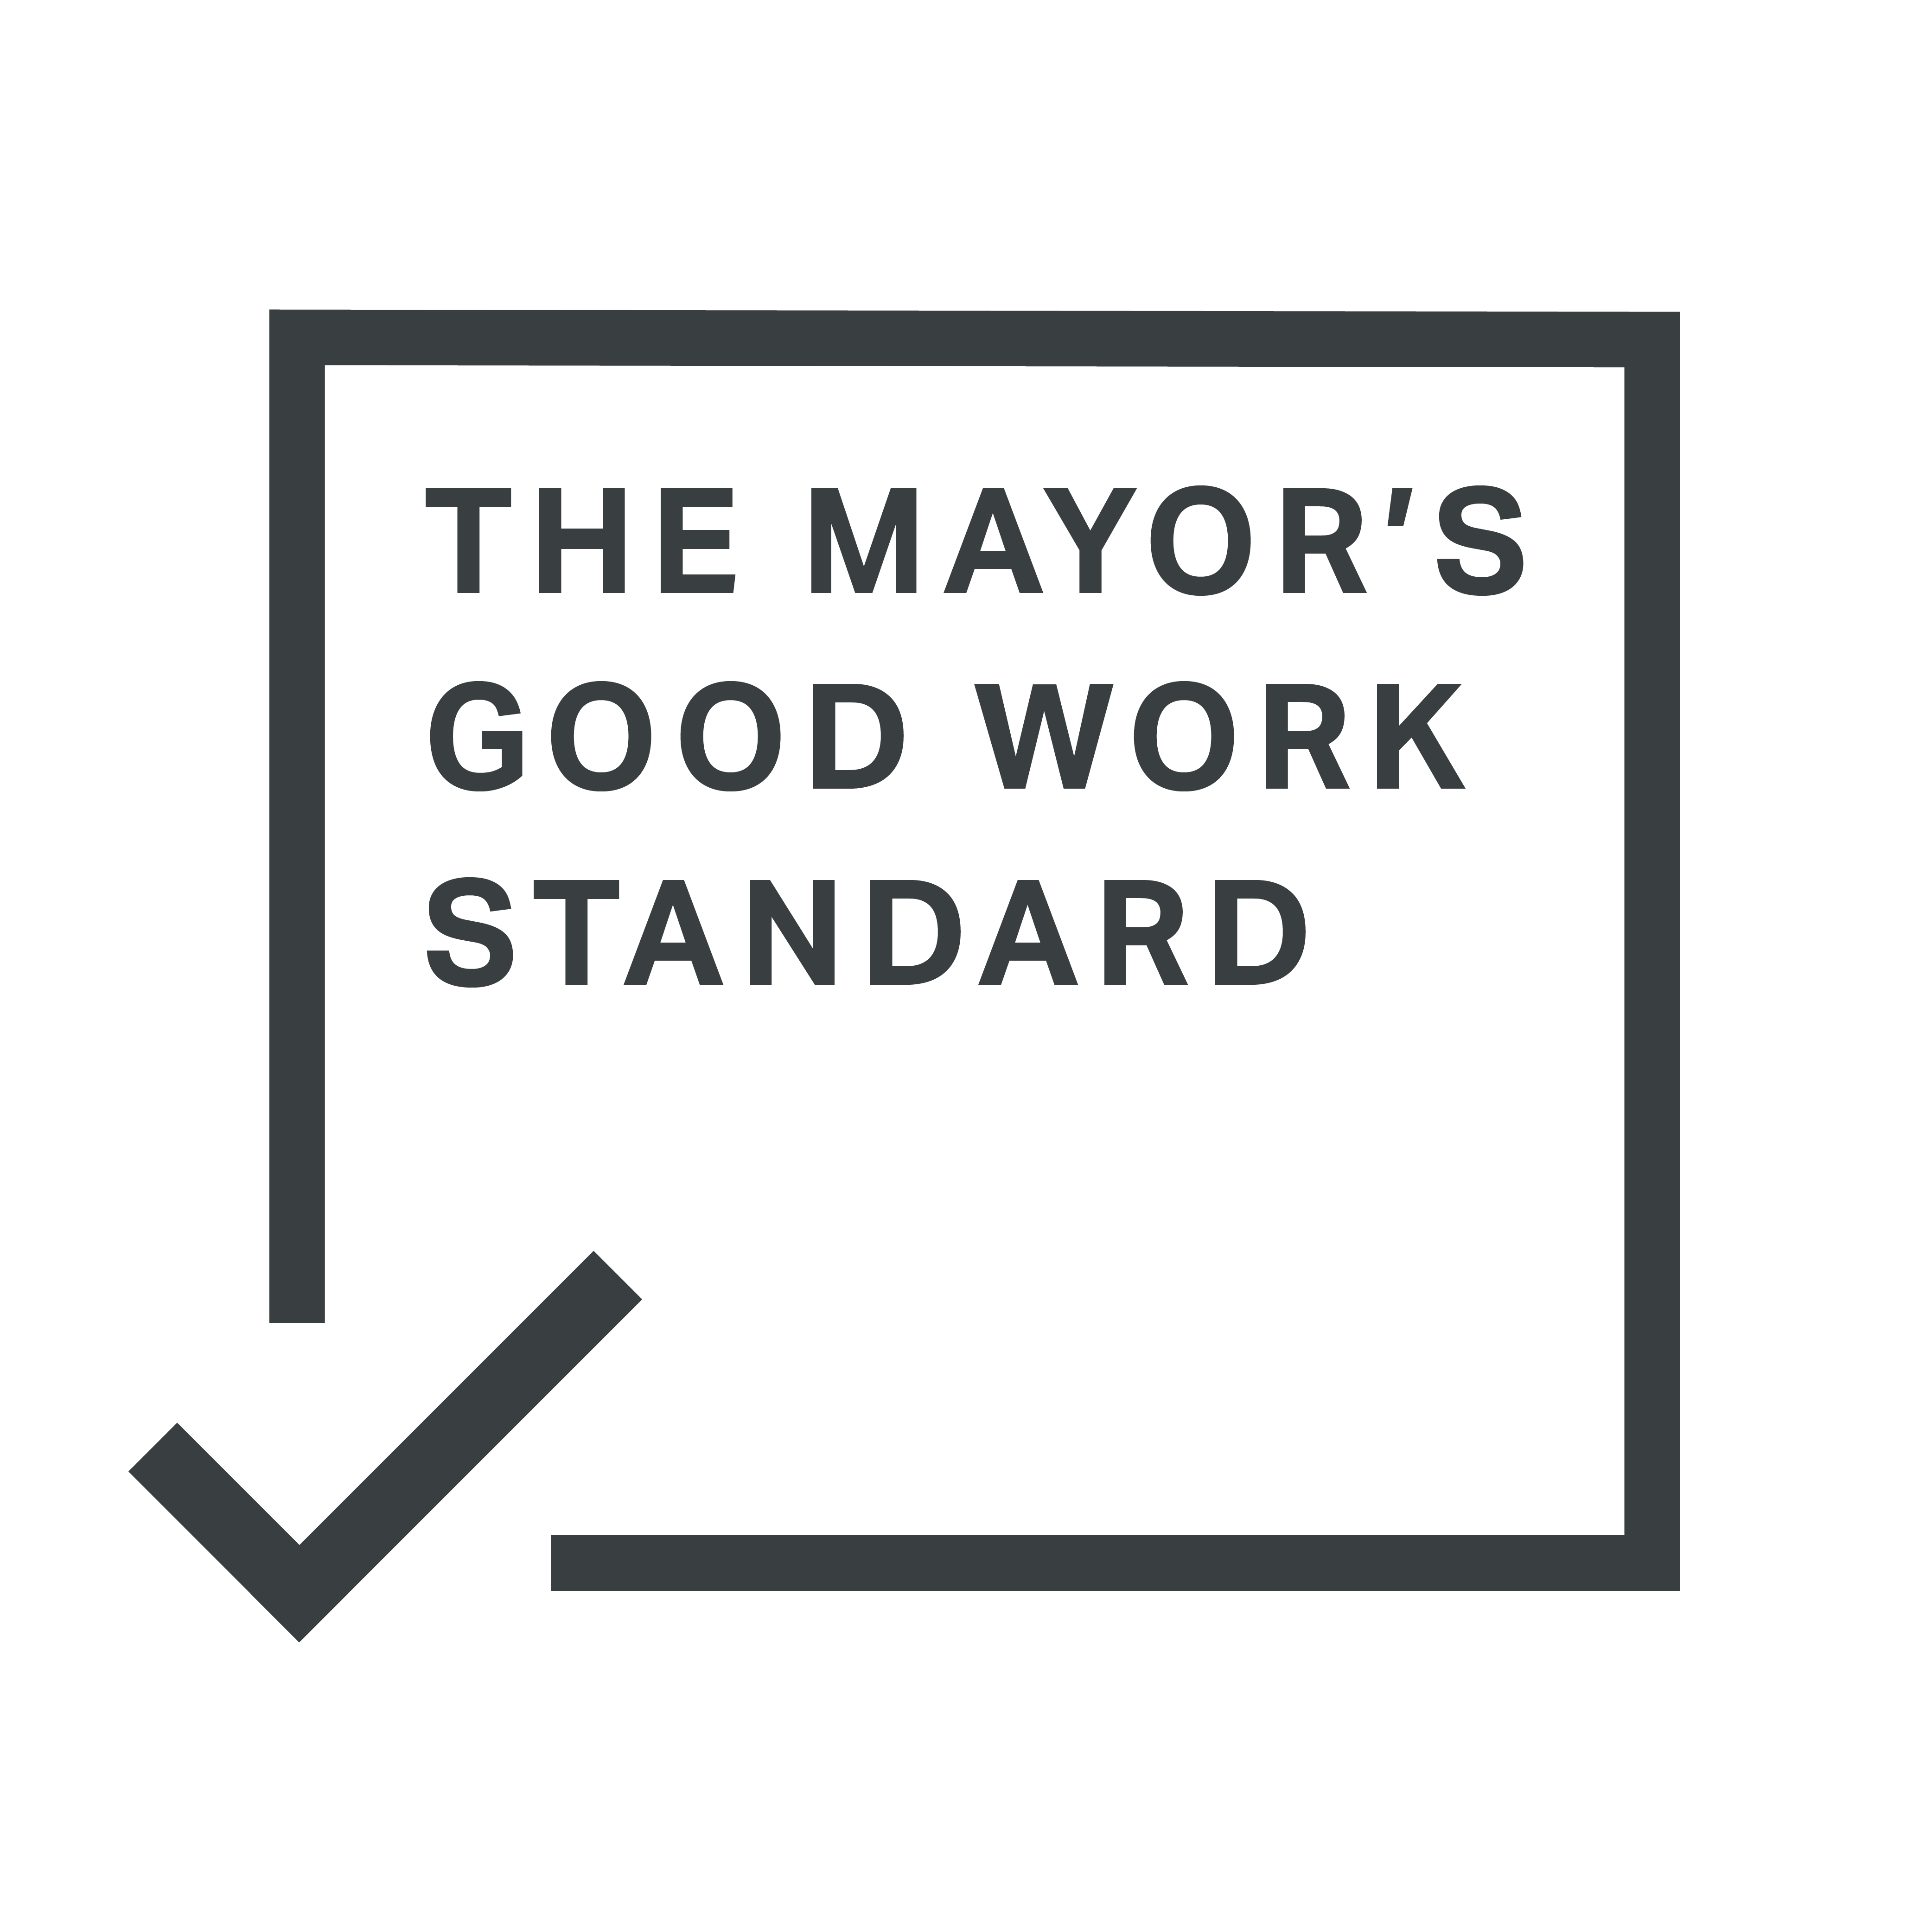 Good work standard logo